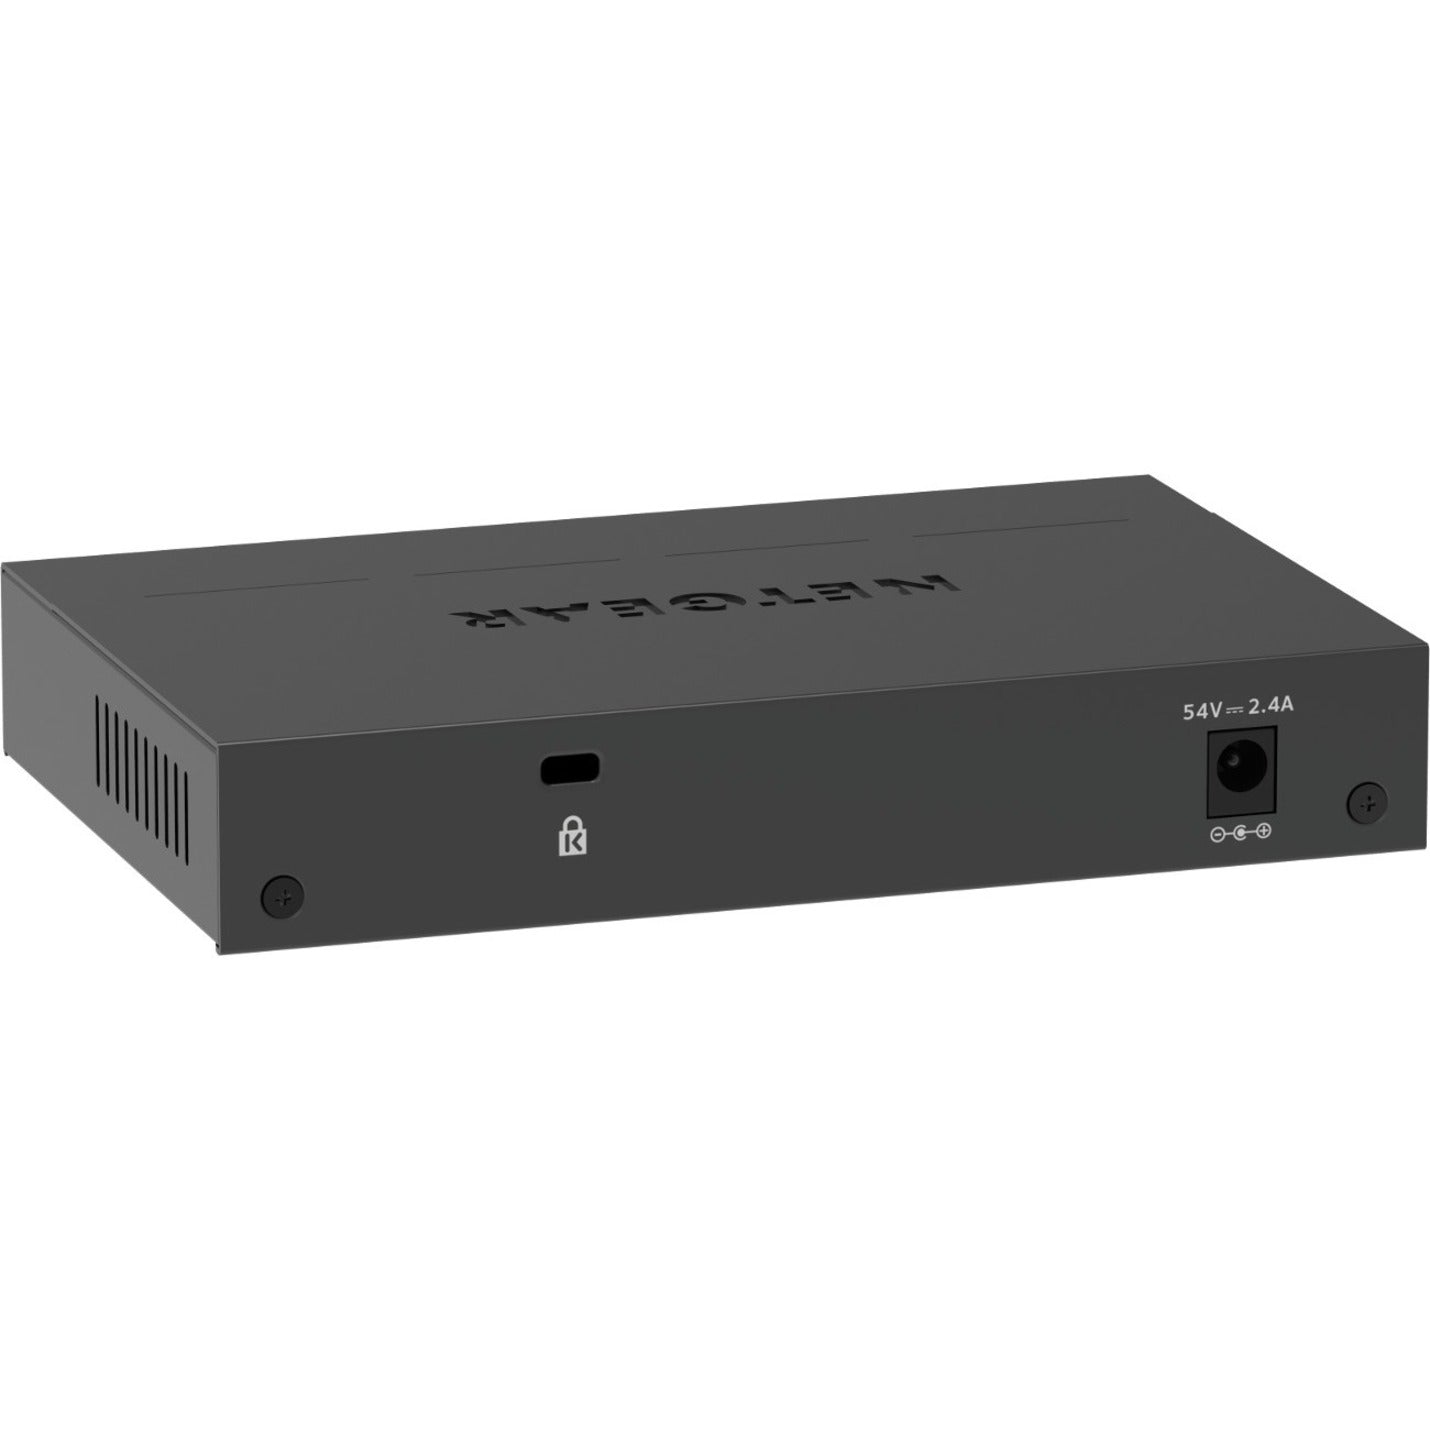 Netgear GS305EPP-100NAS GS305EPP Ethernet Switch, 5-Port Gigabit Ethernet PoE+, 120W PoE Budget